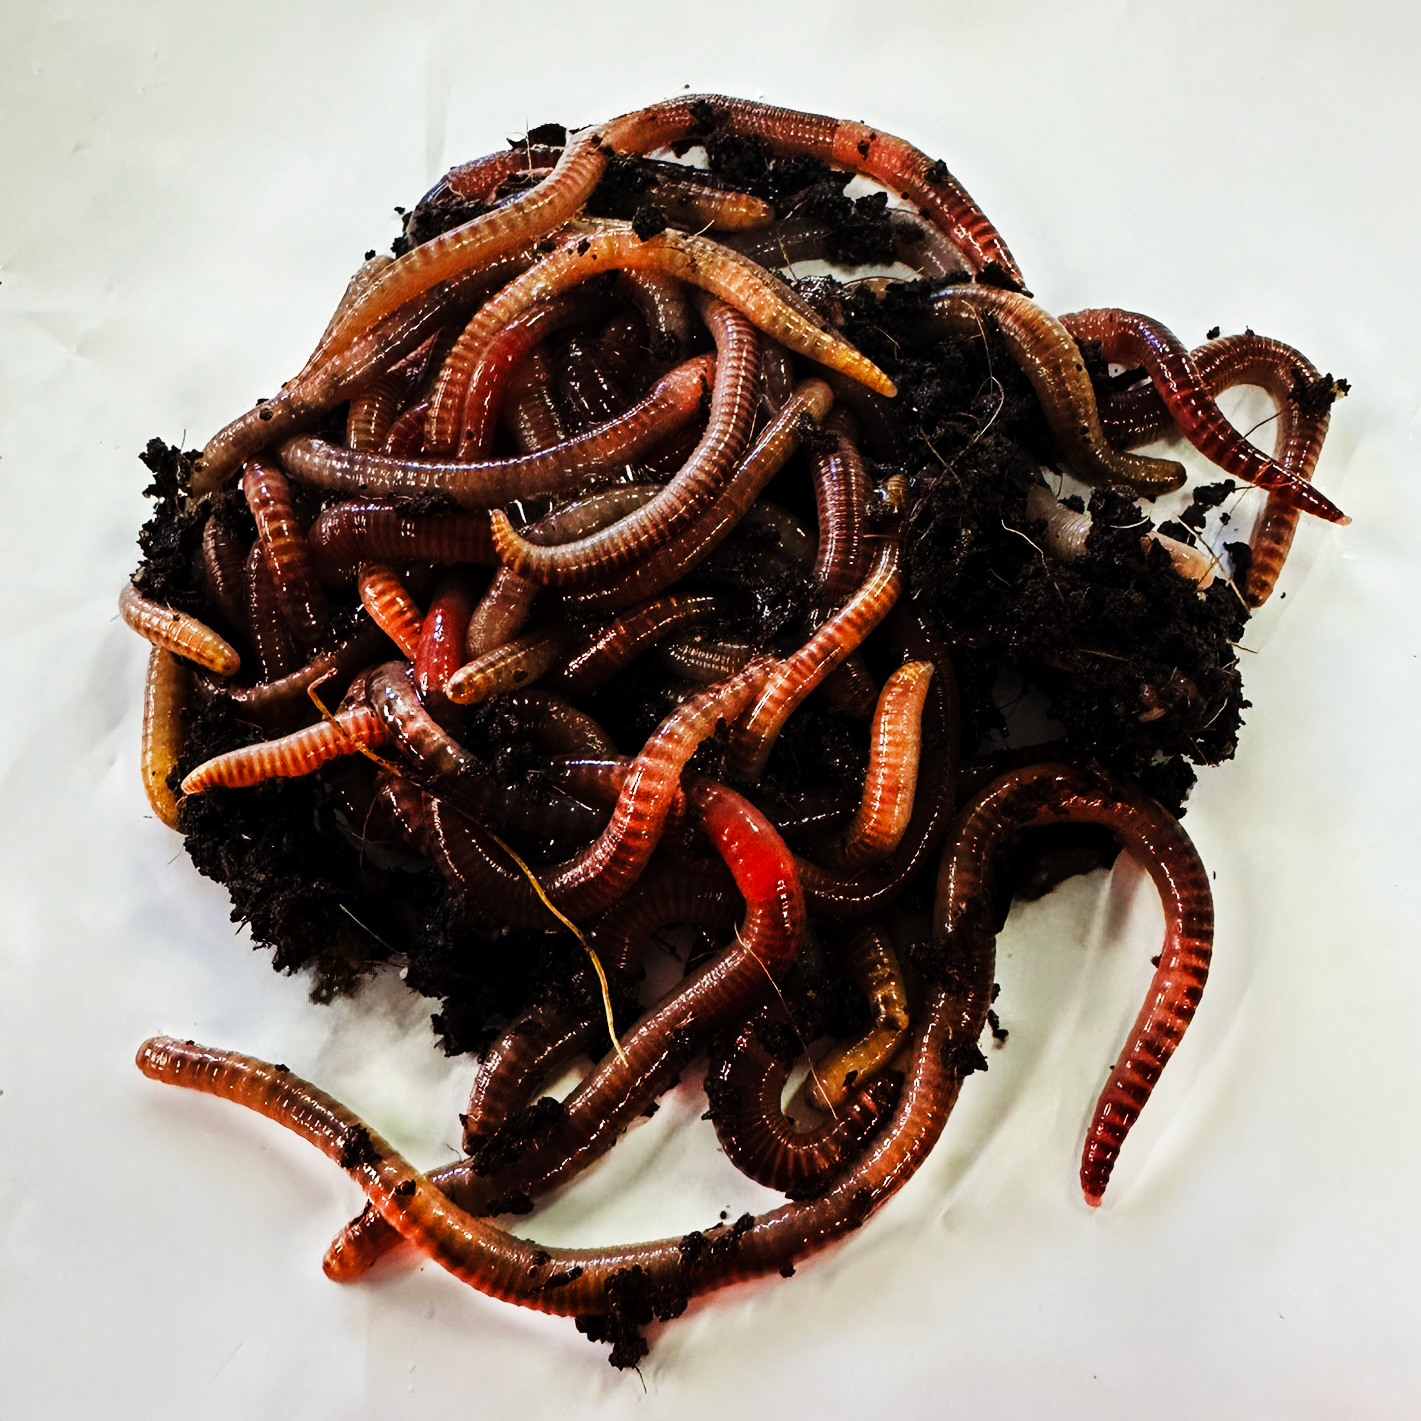 European Nightcrawlers – Trout Worms - Worm Wrangler